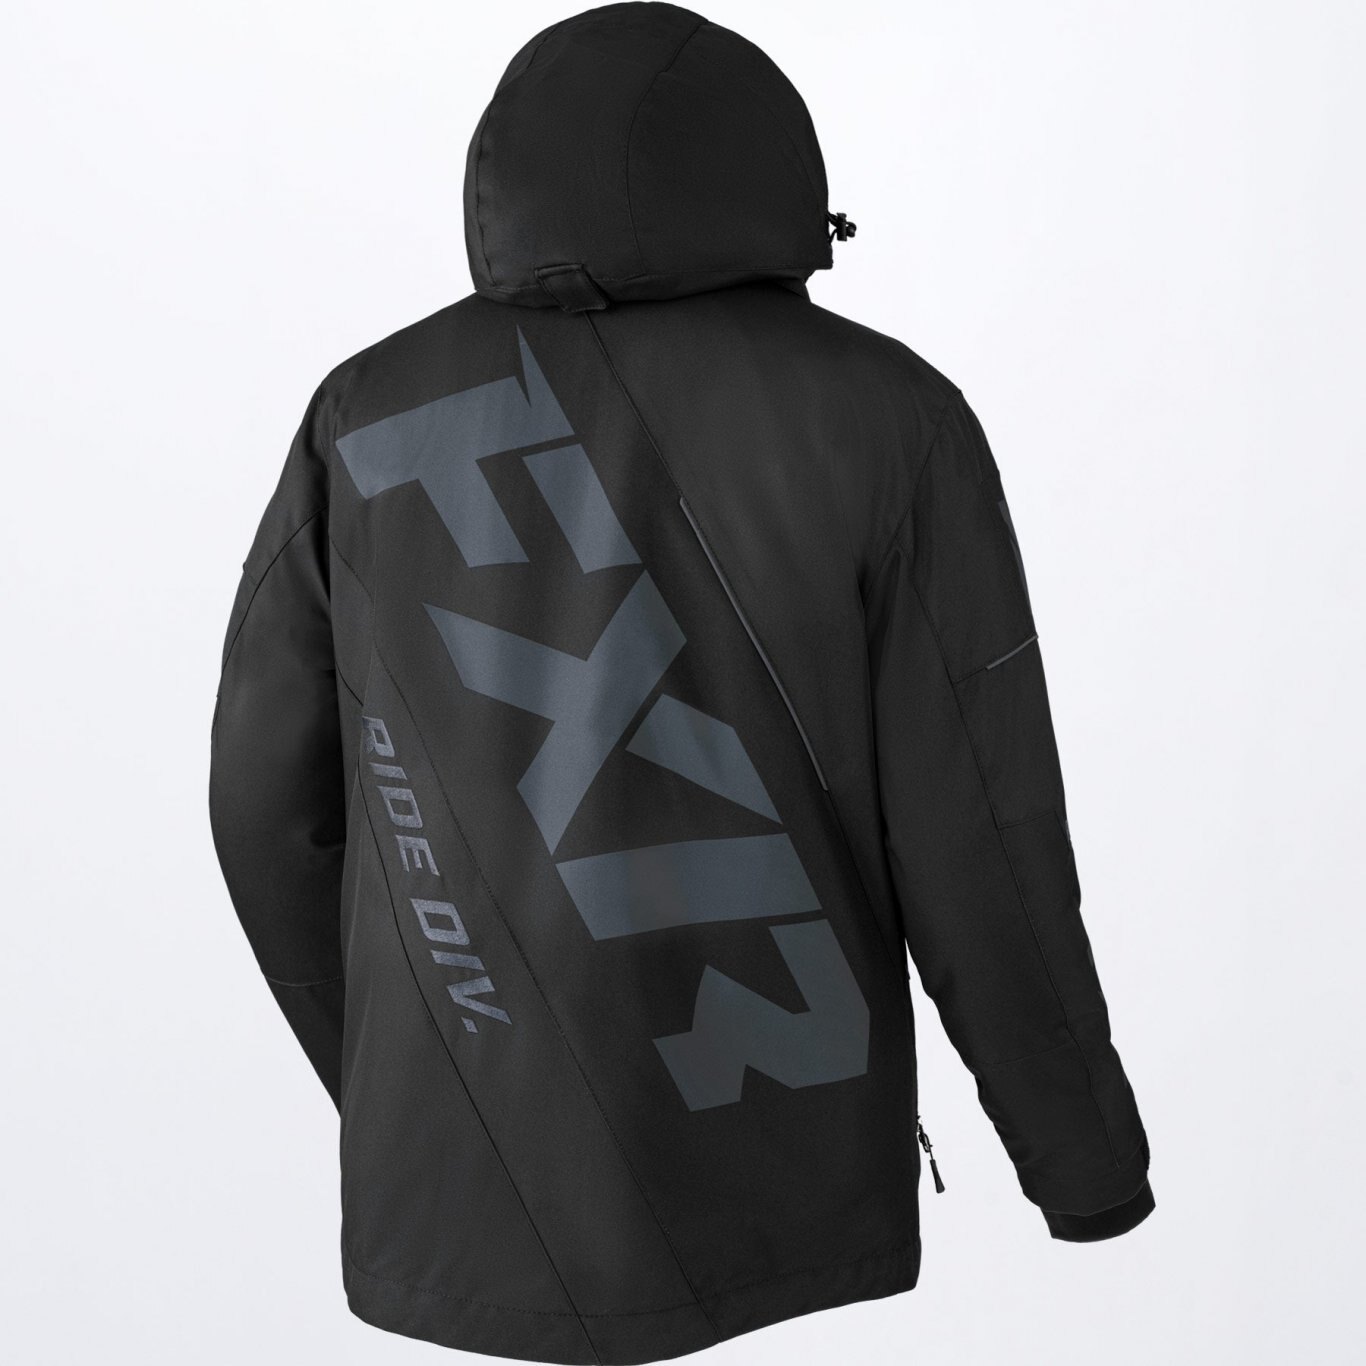 FXR Men's CX Jacket